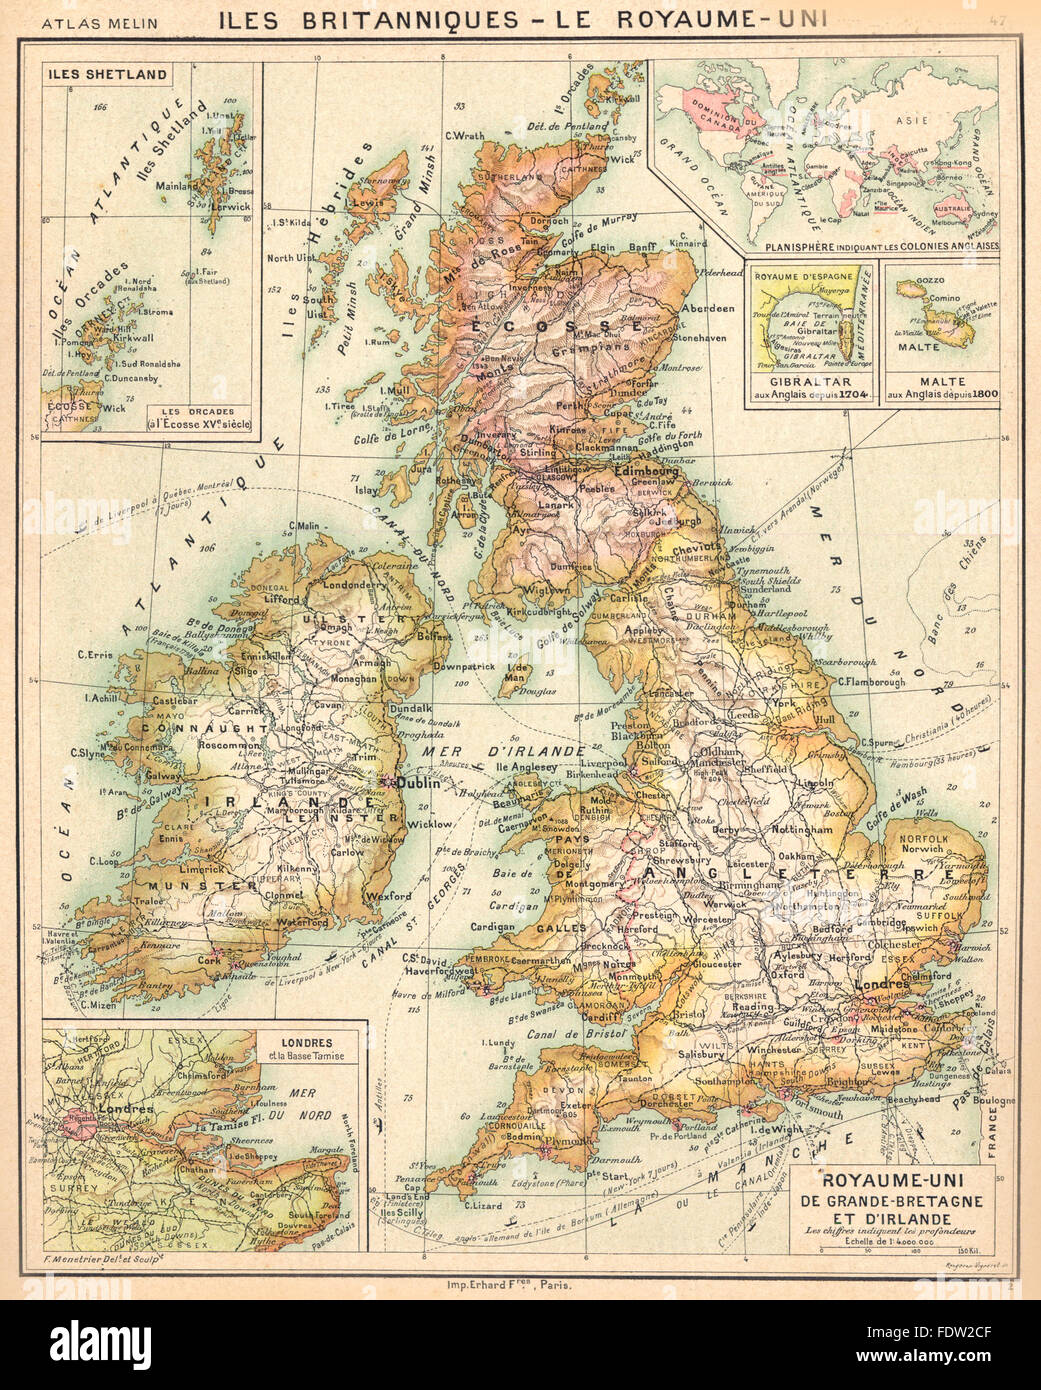 ILES BRITANNIQUES: Grande- Bretagne Irlande; Orcades; Gibraltar;Malte, 1900 map Stock Photo